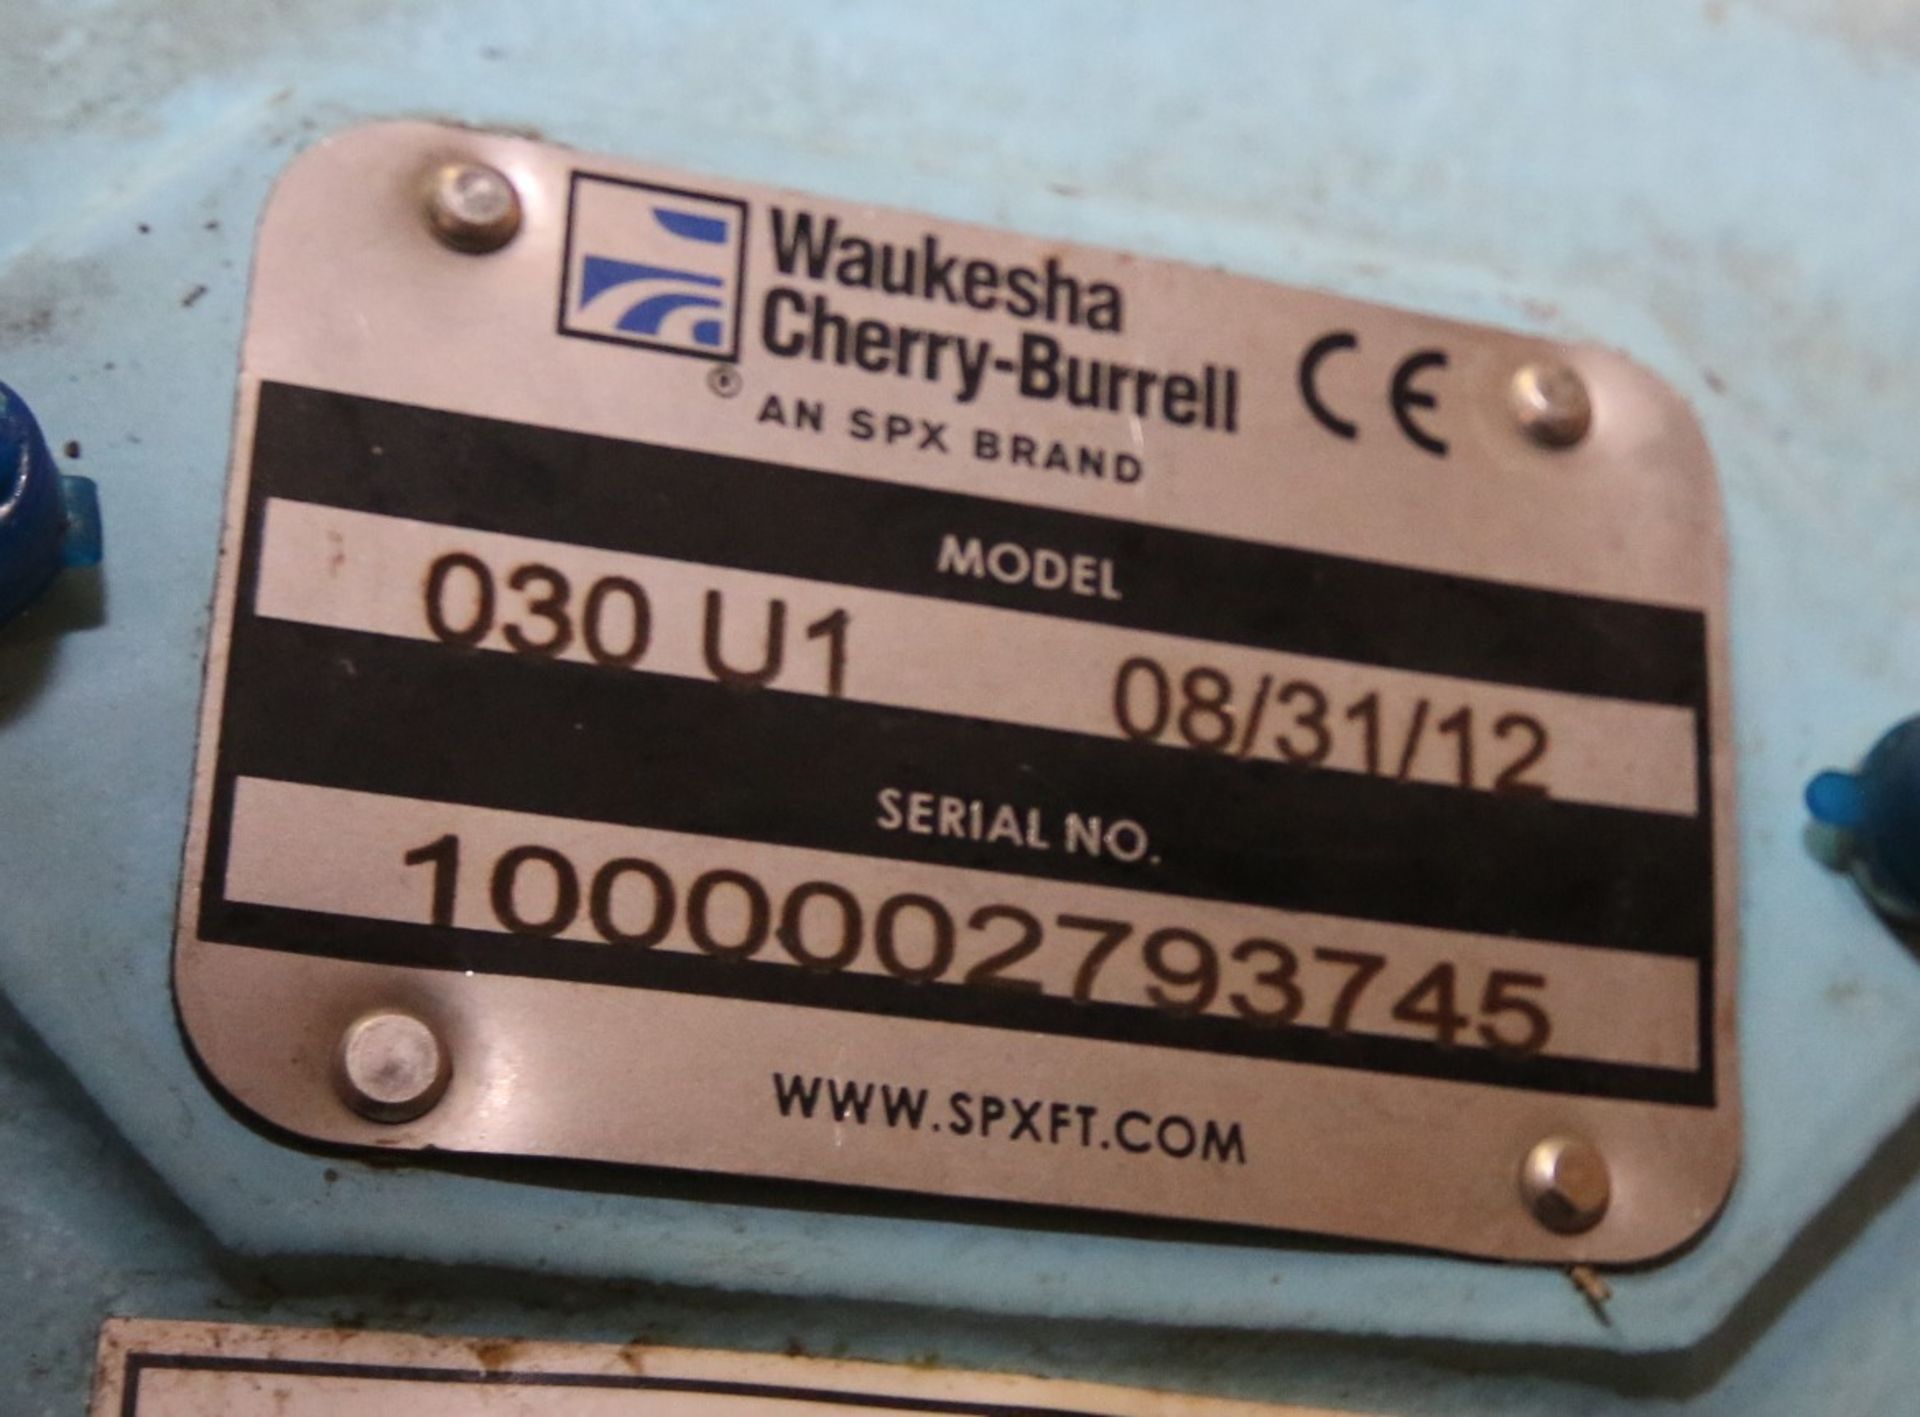 Waukesha Posive Displacement Pump 2012, Model 030 U1, S/N 1000002793745, 1.5" Clamp Type S/S Head - Image 6 of 7